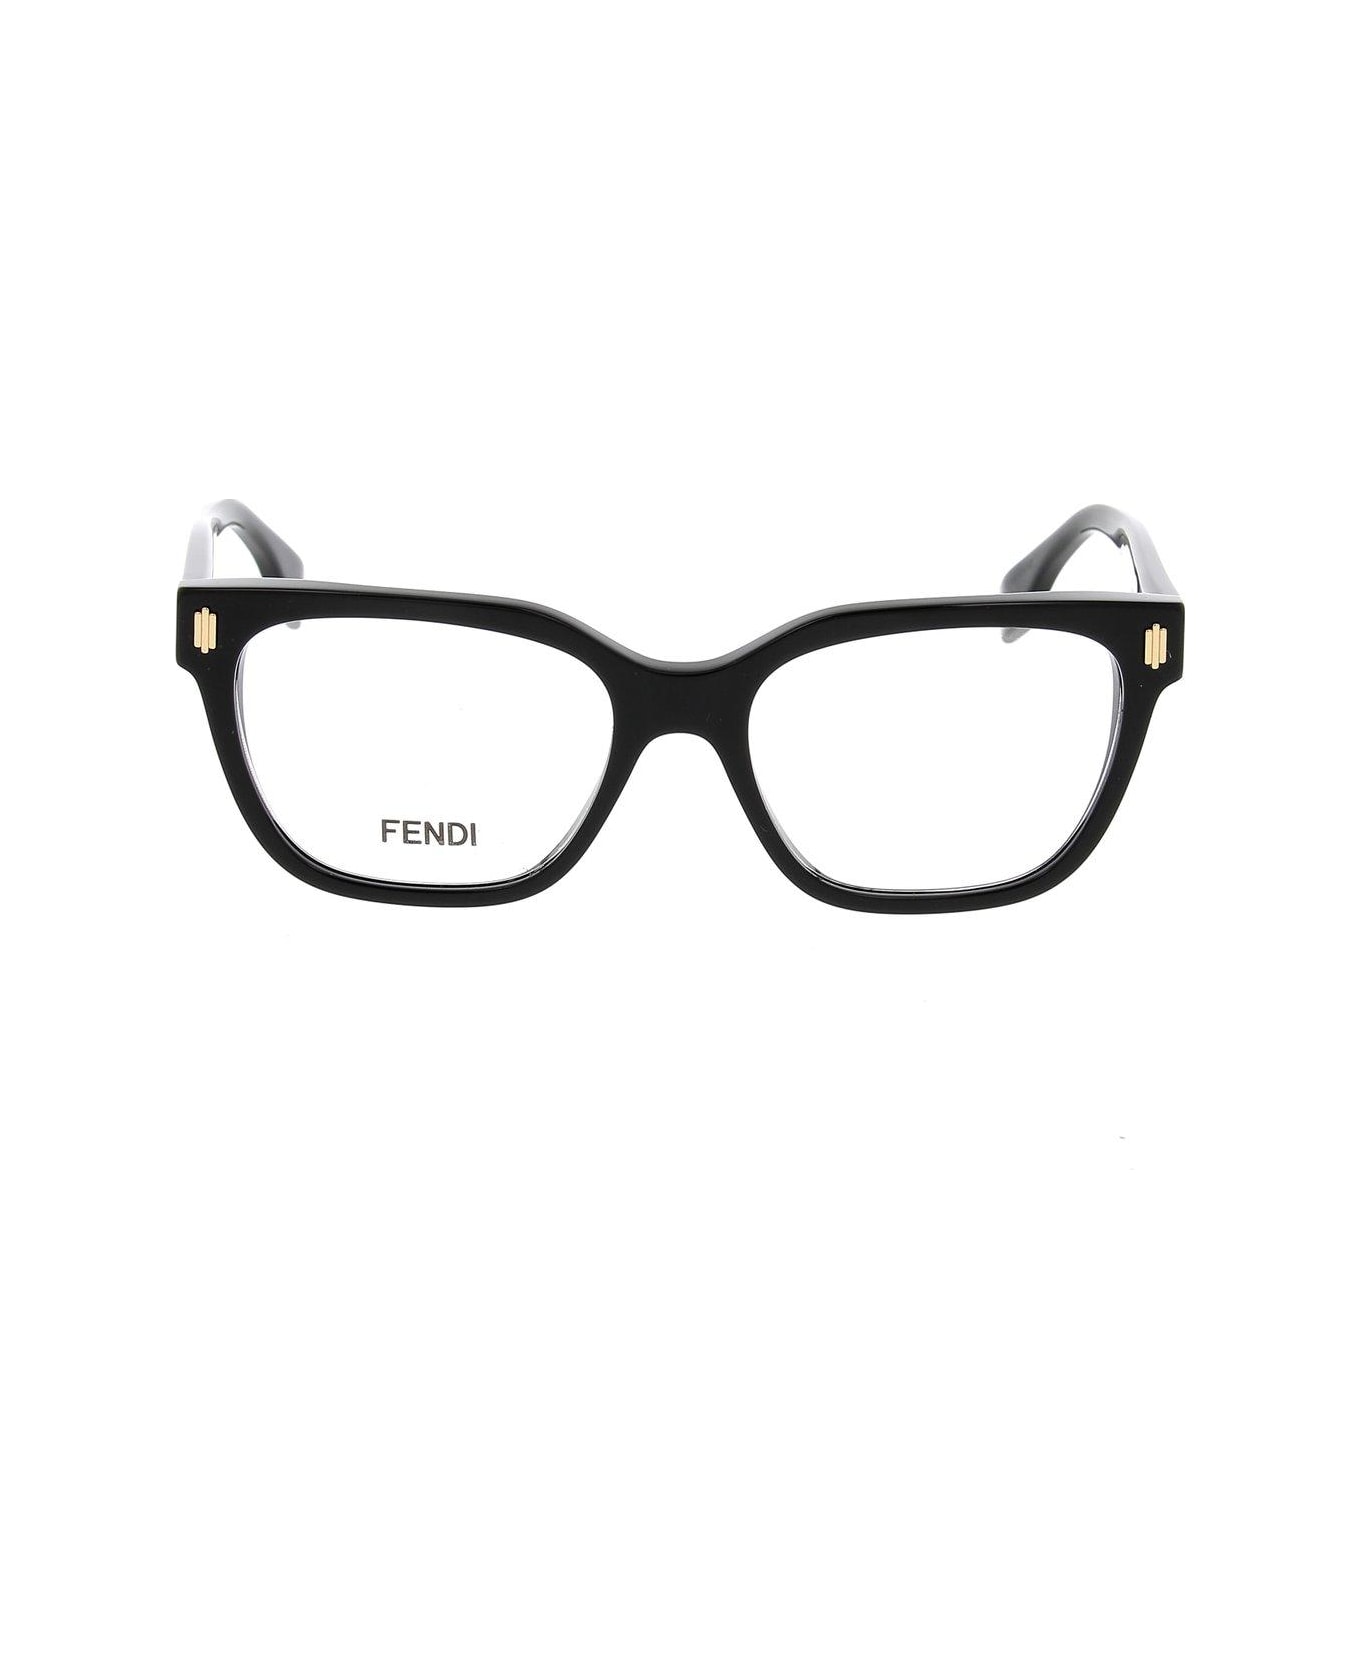 Fendi Eyewear Rectangle Frame Glasses - 001